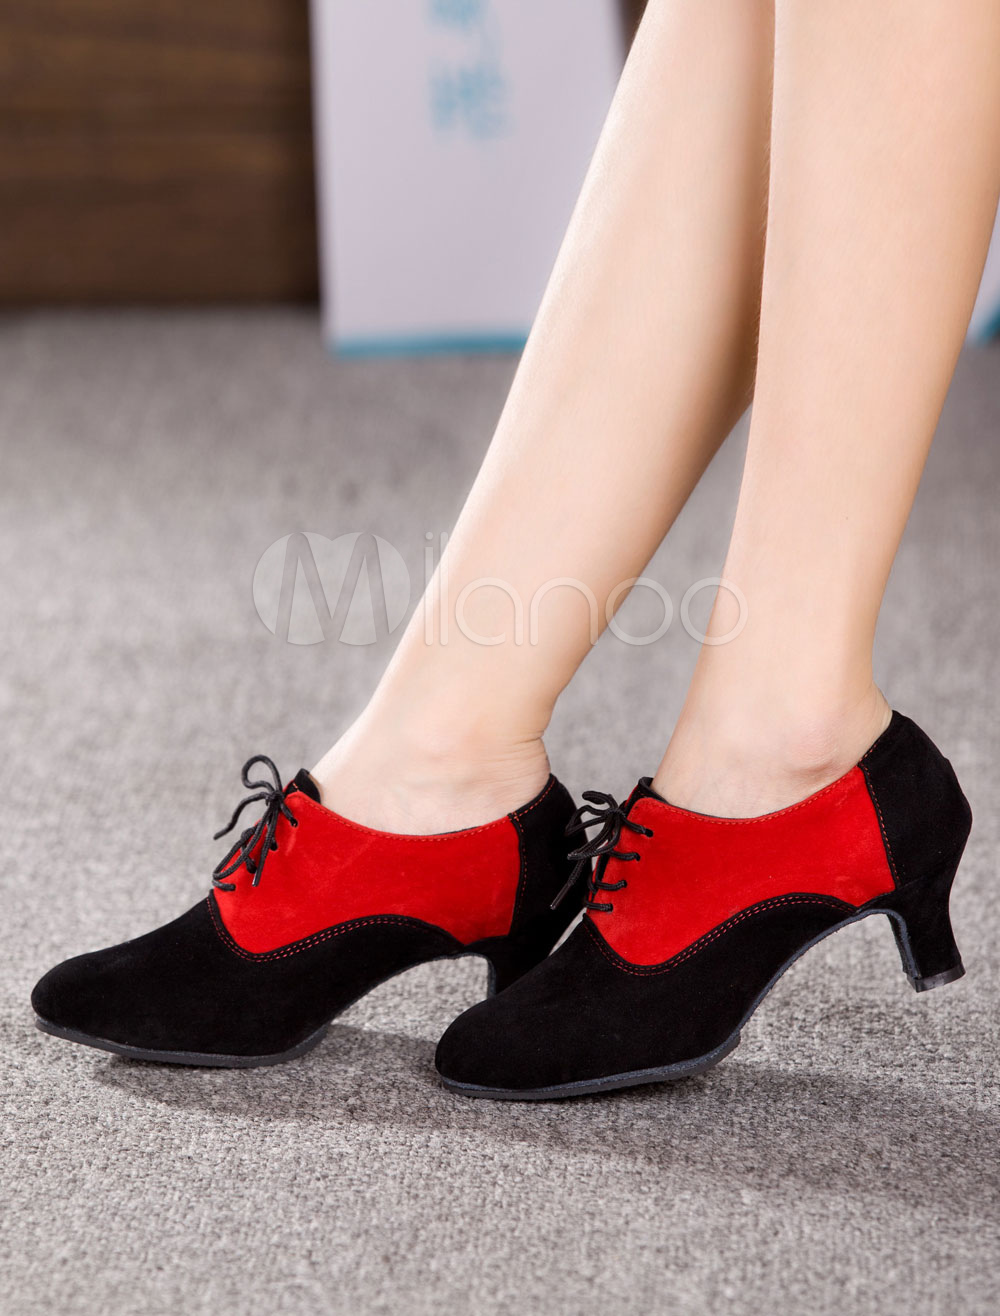 Black Dance Shoes Lace Up Suede Chic Heels for Women - Milanoo.com